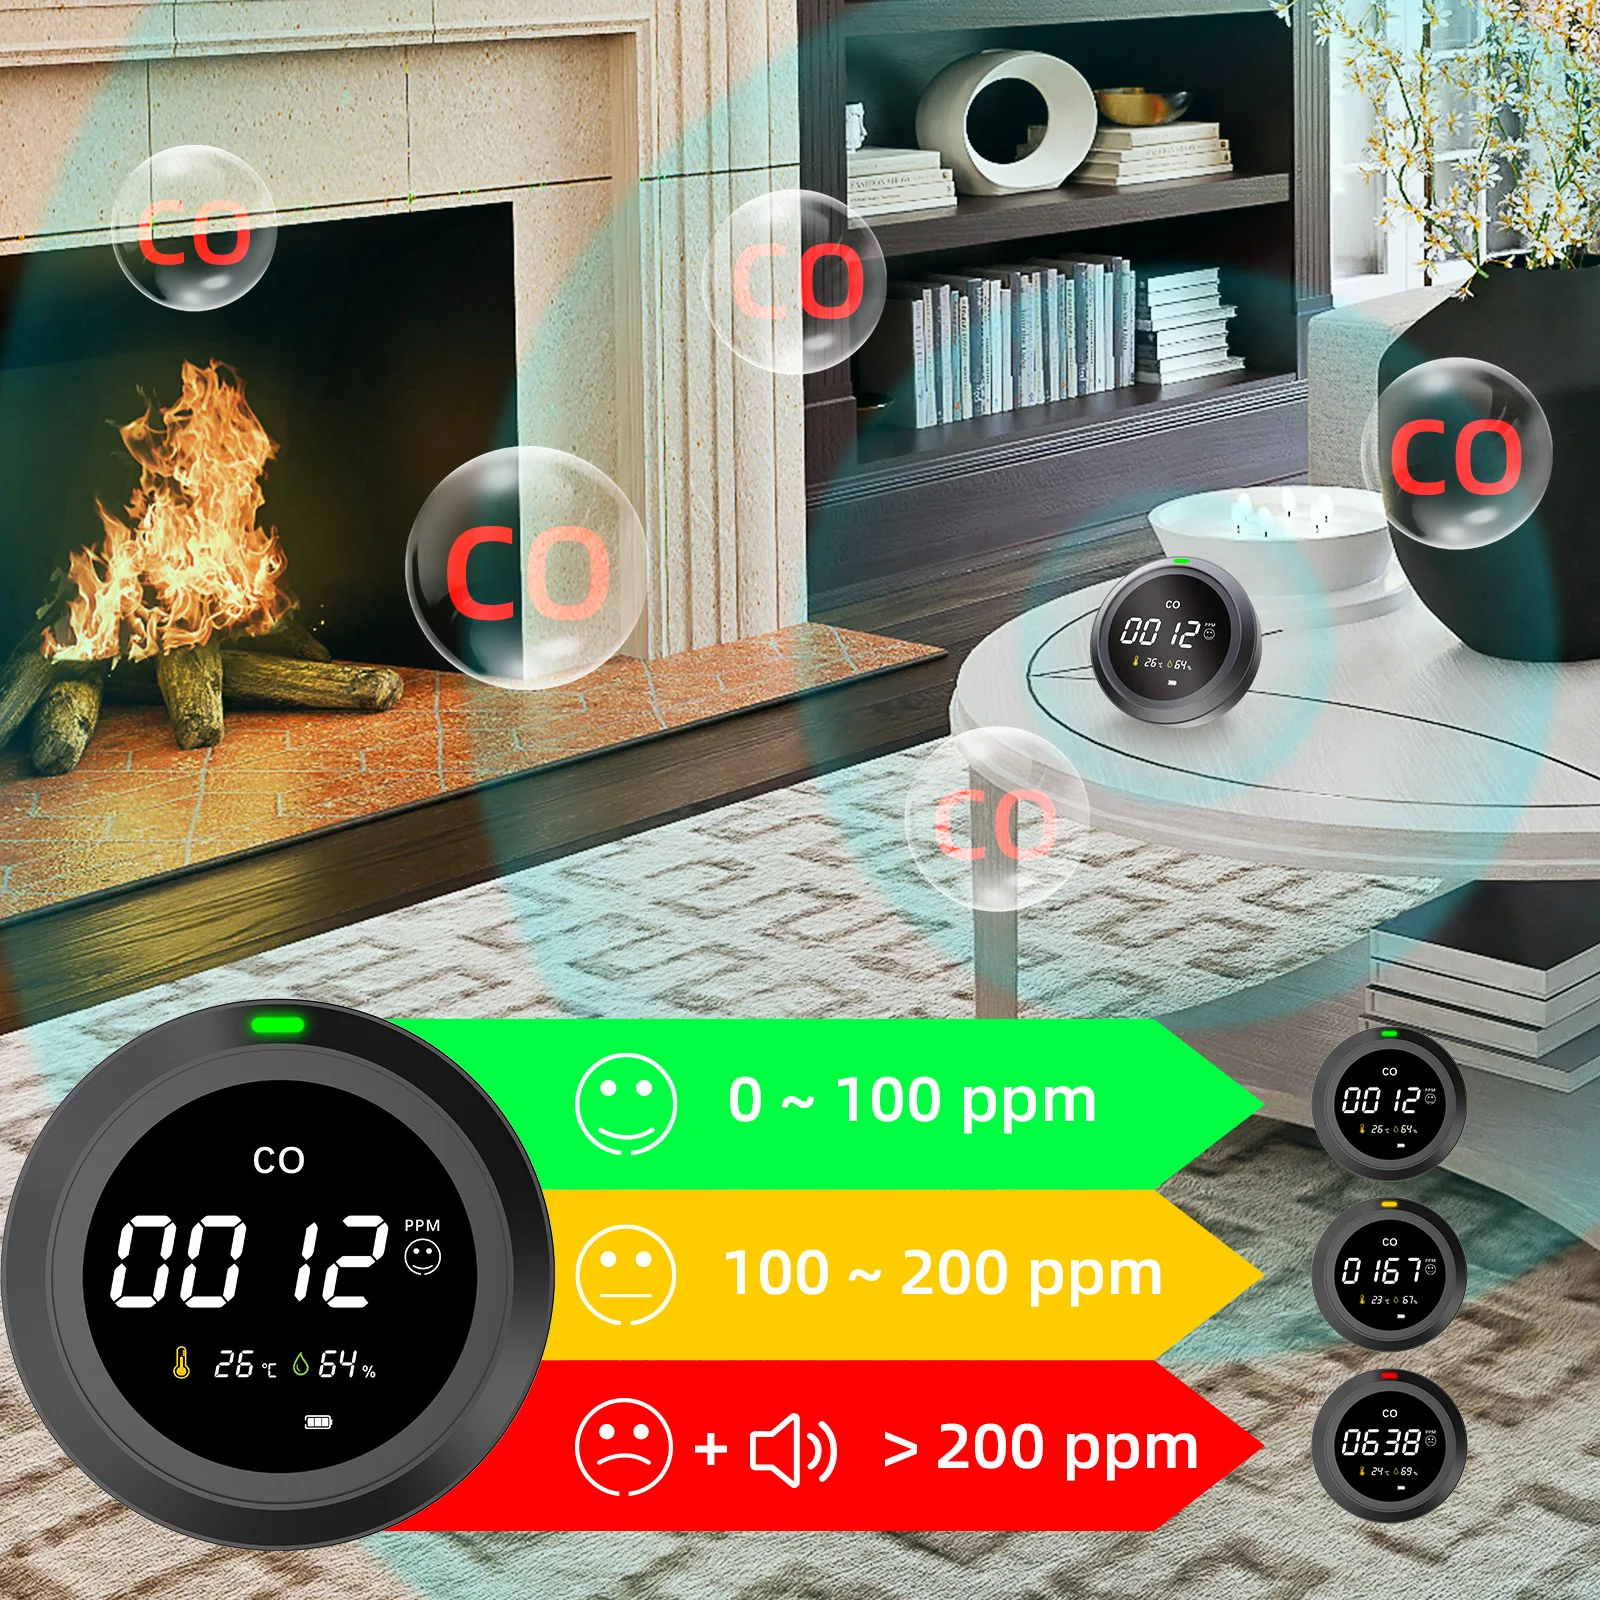 Best Seller OEM ODM Home Security LCD Carbon Monoxide Detector CO Alarm Carbon Monoxide Alarms